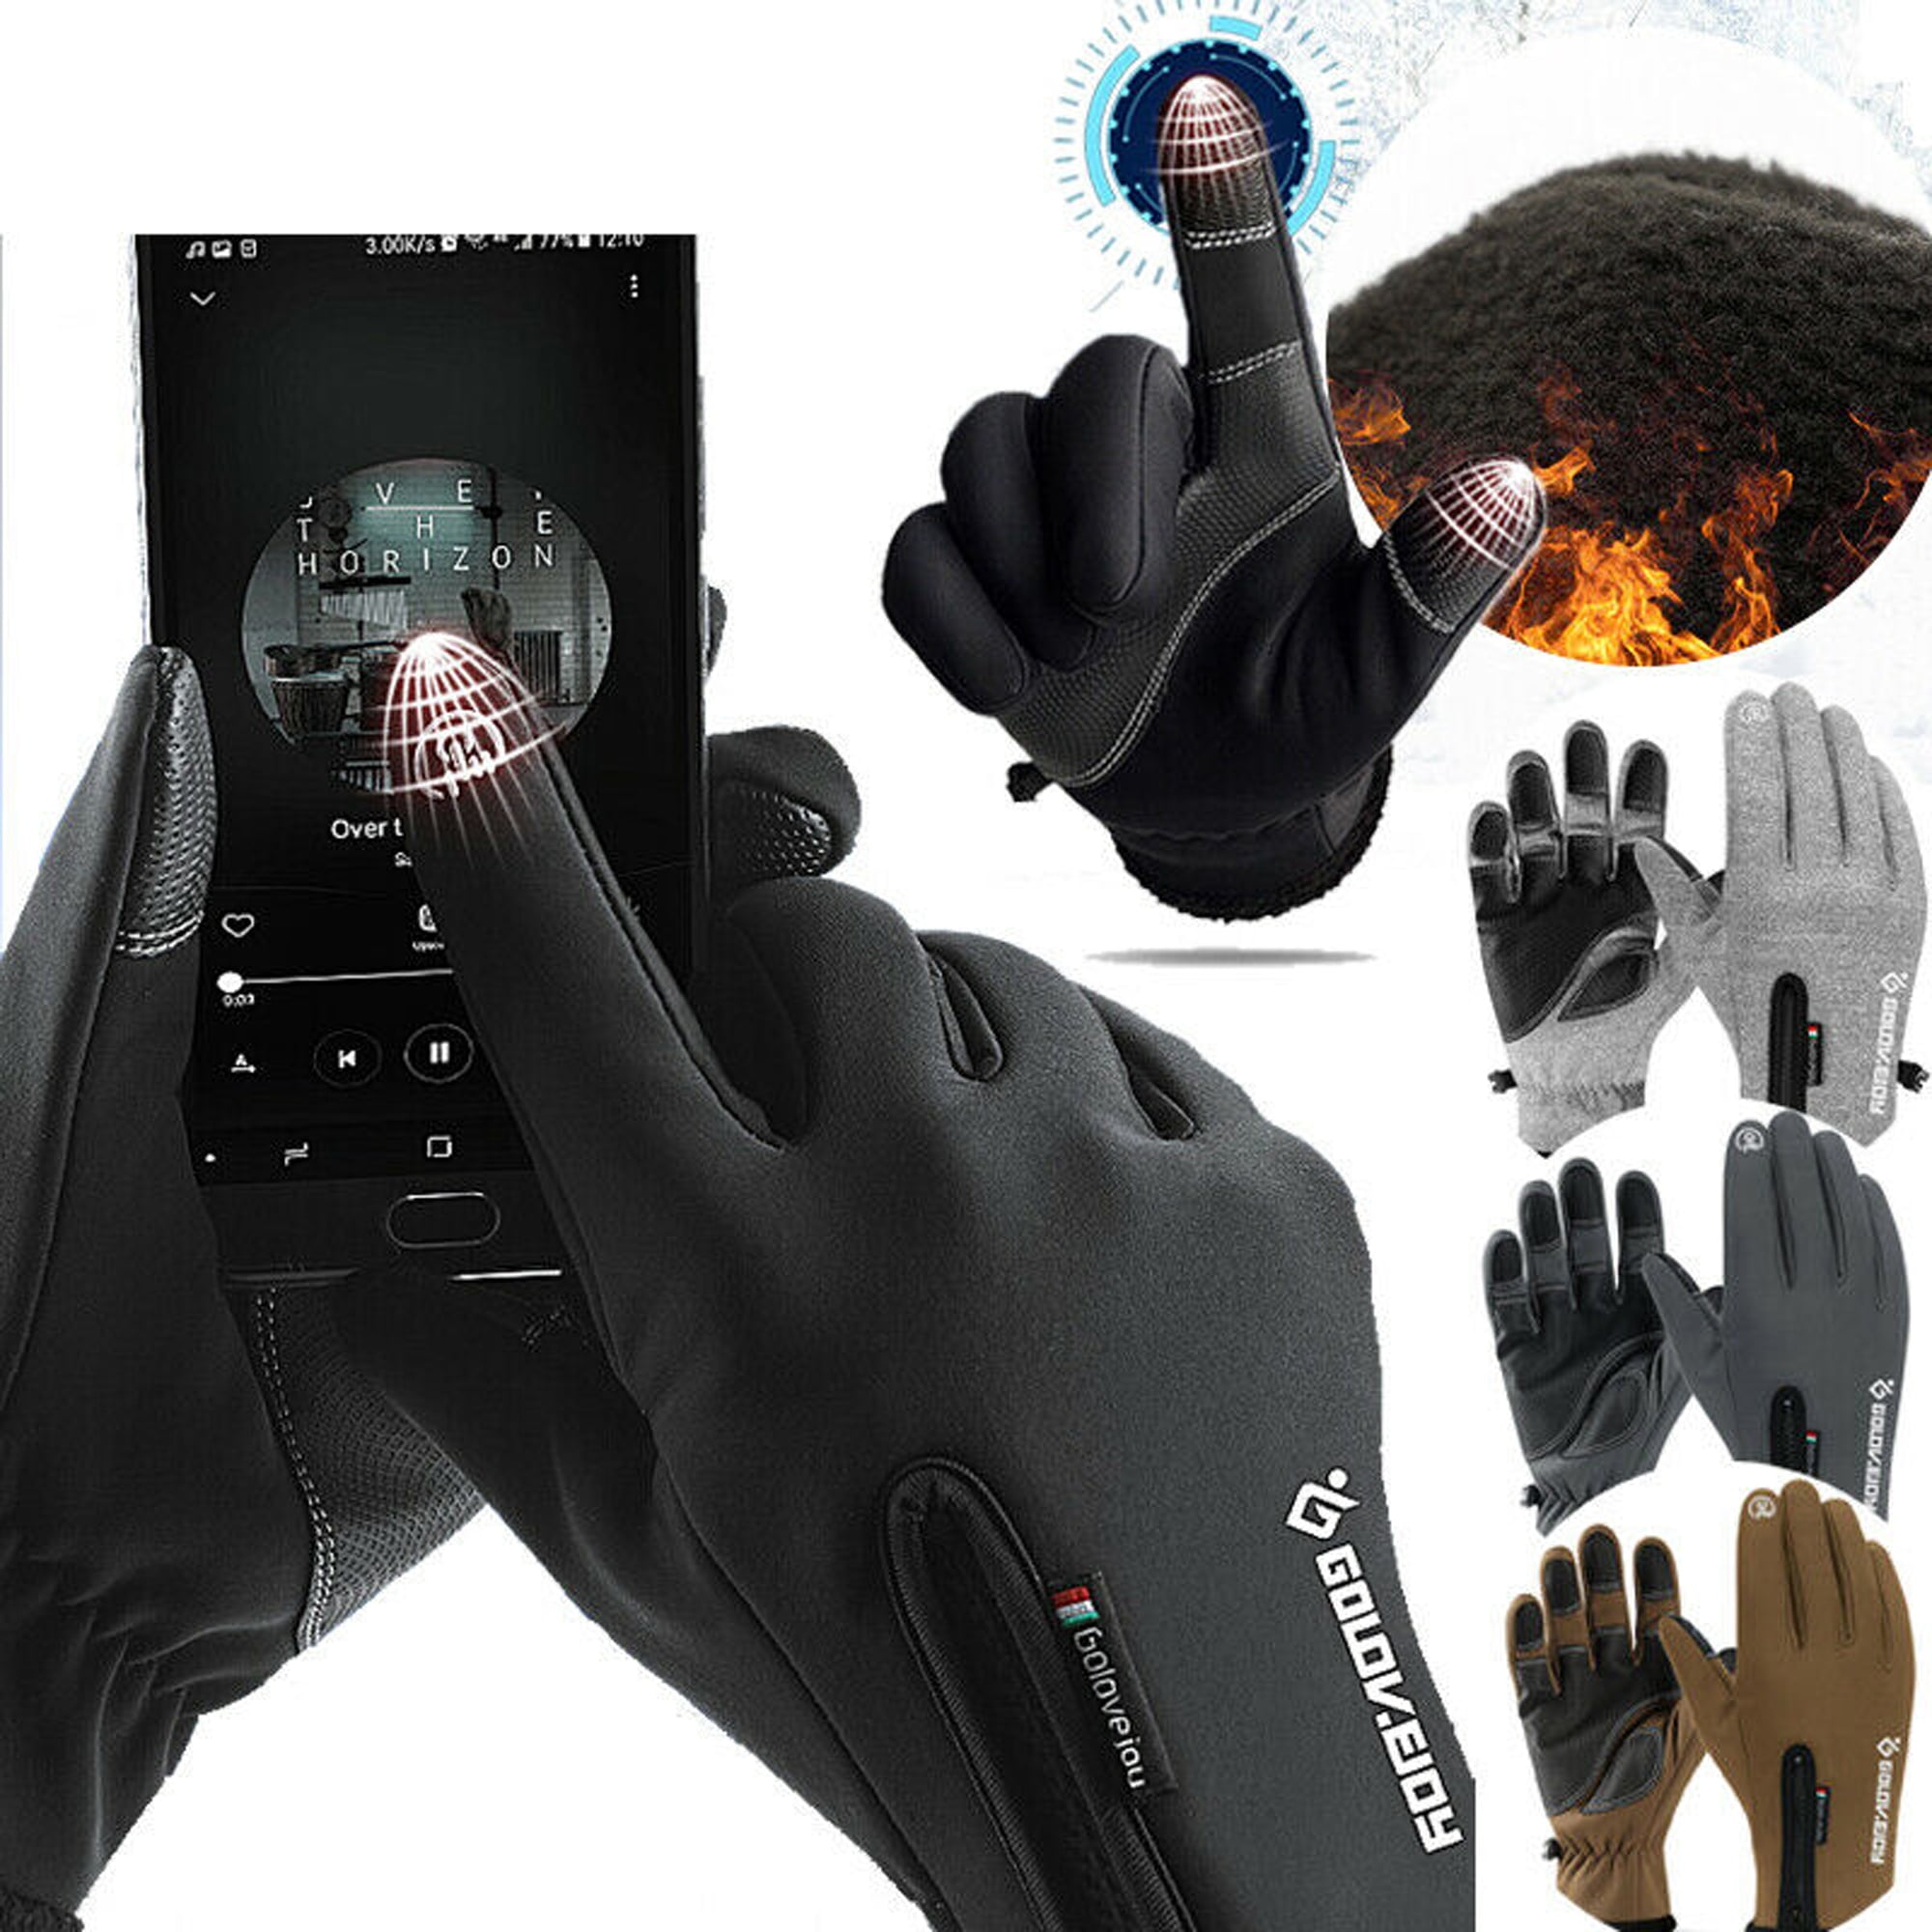 Winter Warm Windproof Waterproof Anti-slip Thermal Touch Screen Bike Ski Gloves